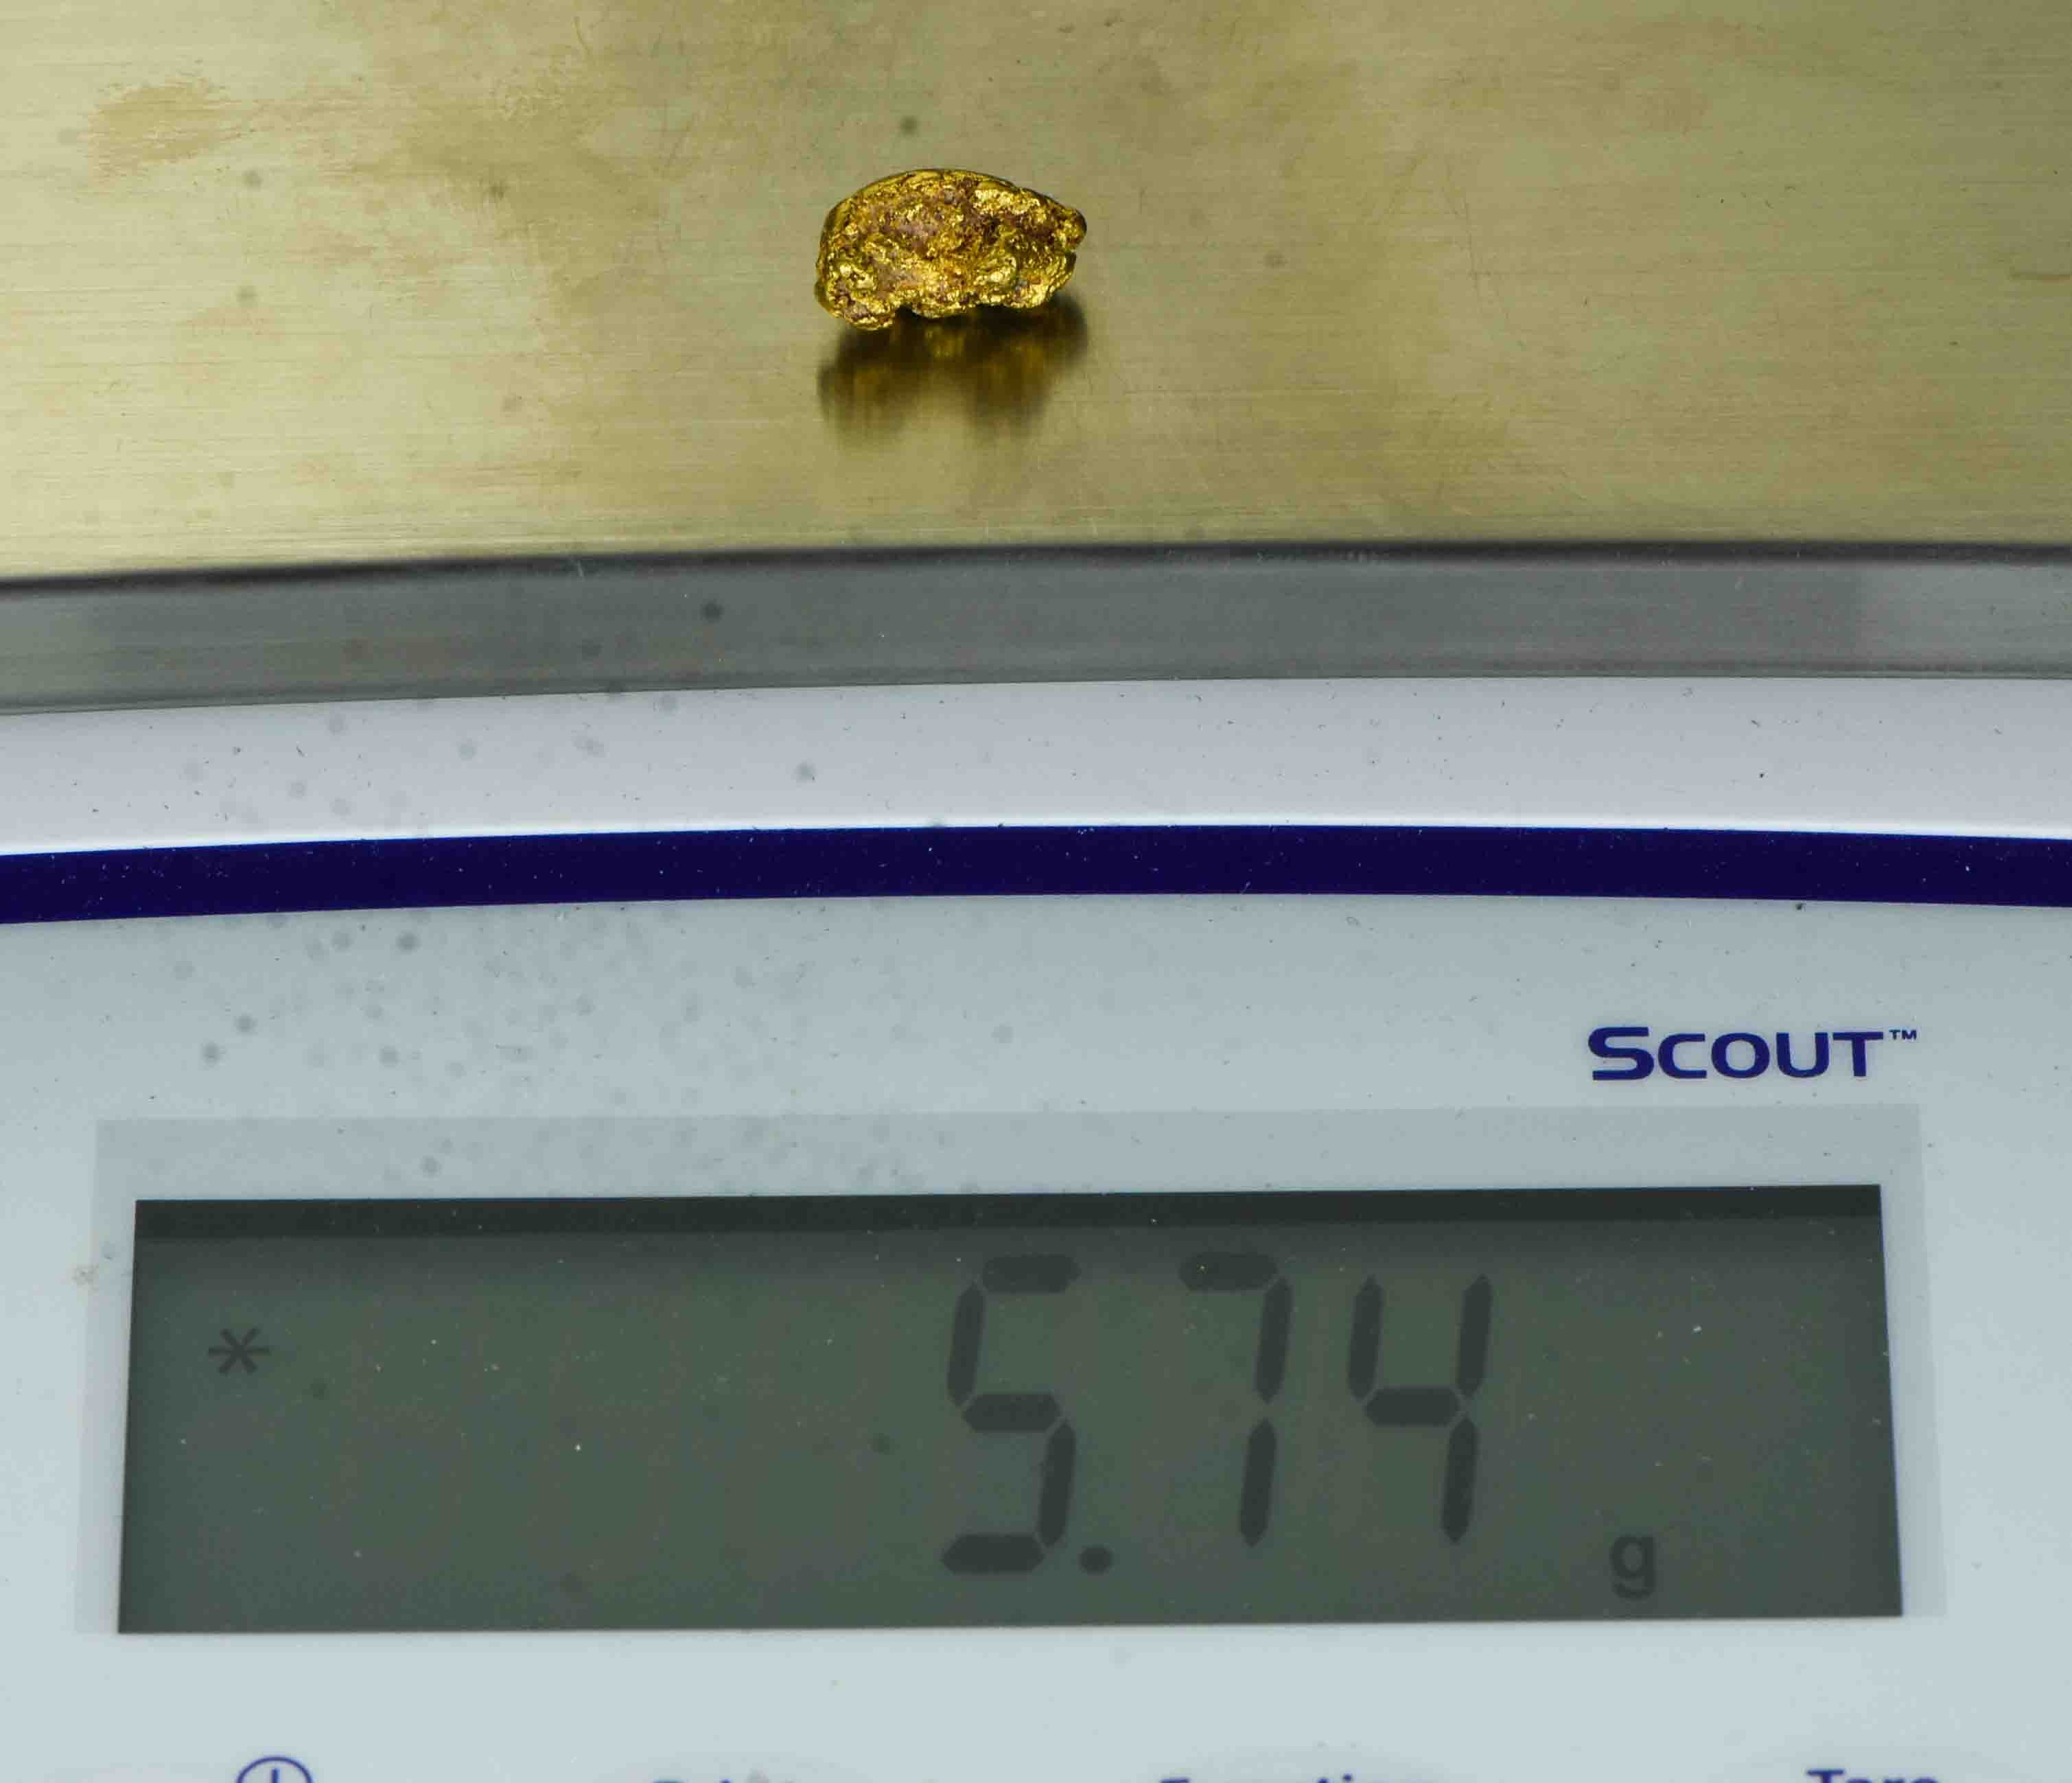 #1174 Natural Gold Nugget Australian 5.74 Grams Genuine